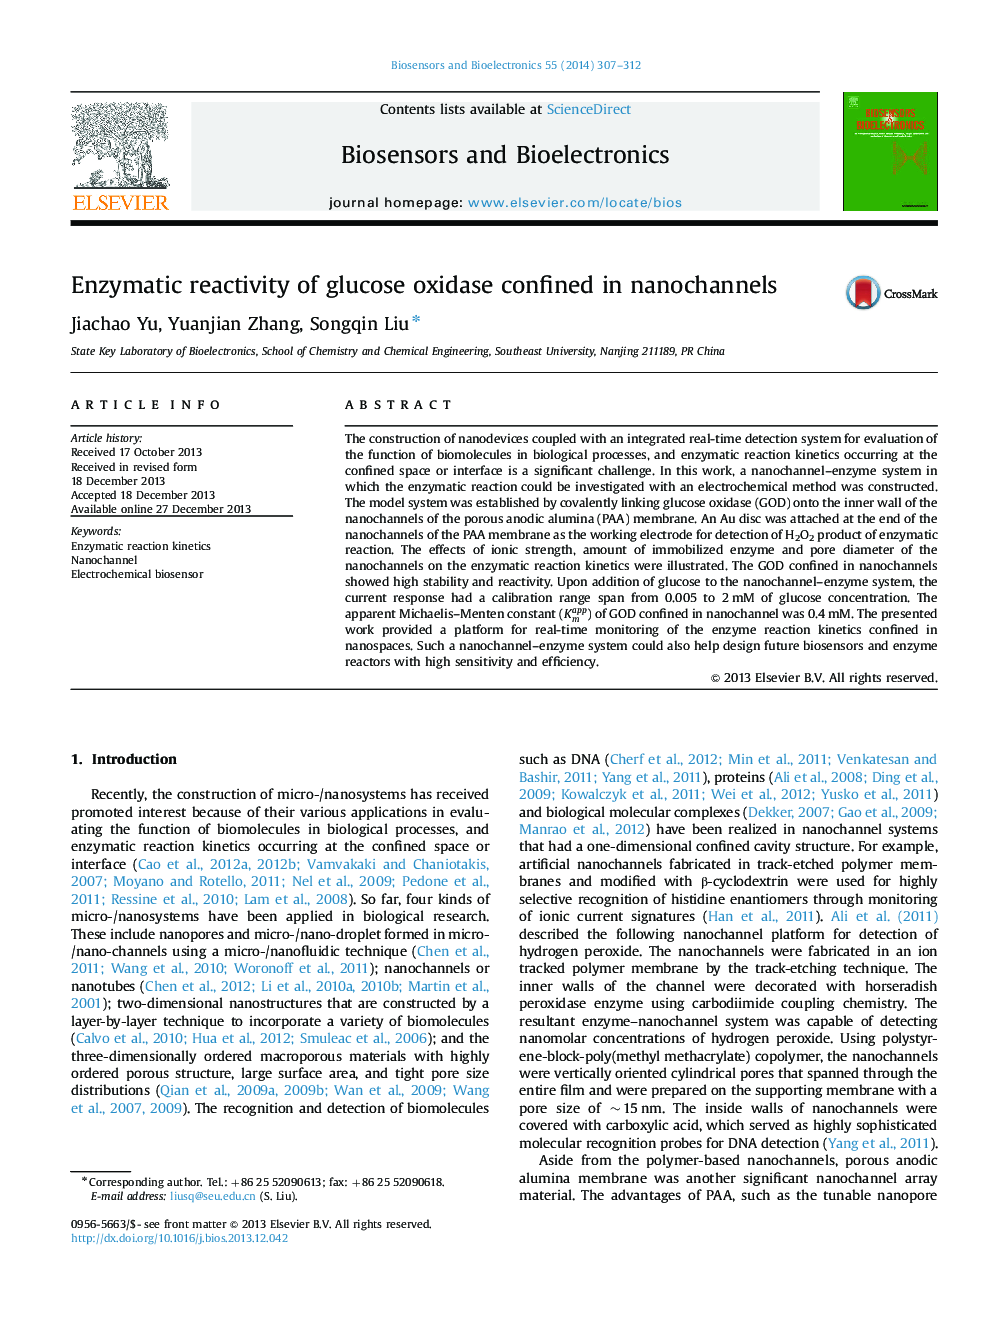 Enzymatic reactivity of glucose oxidase confined in nanochannels